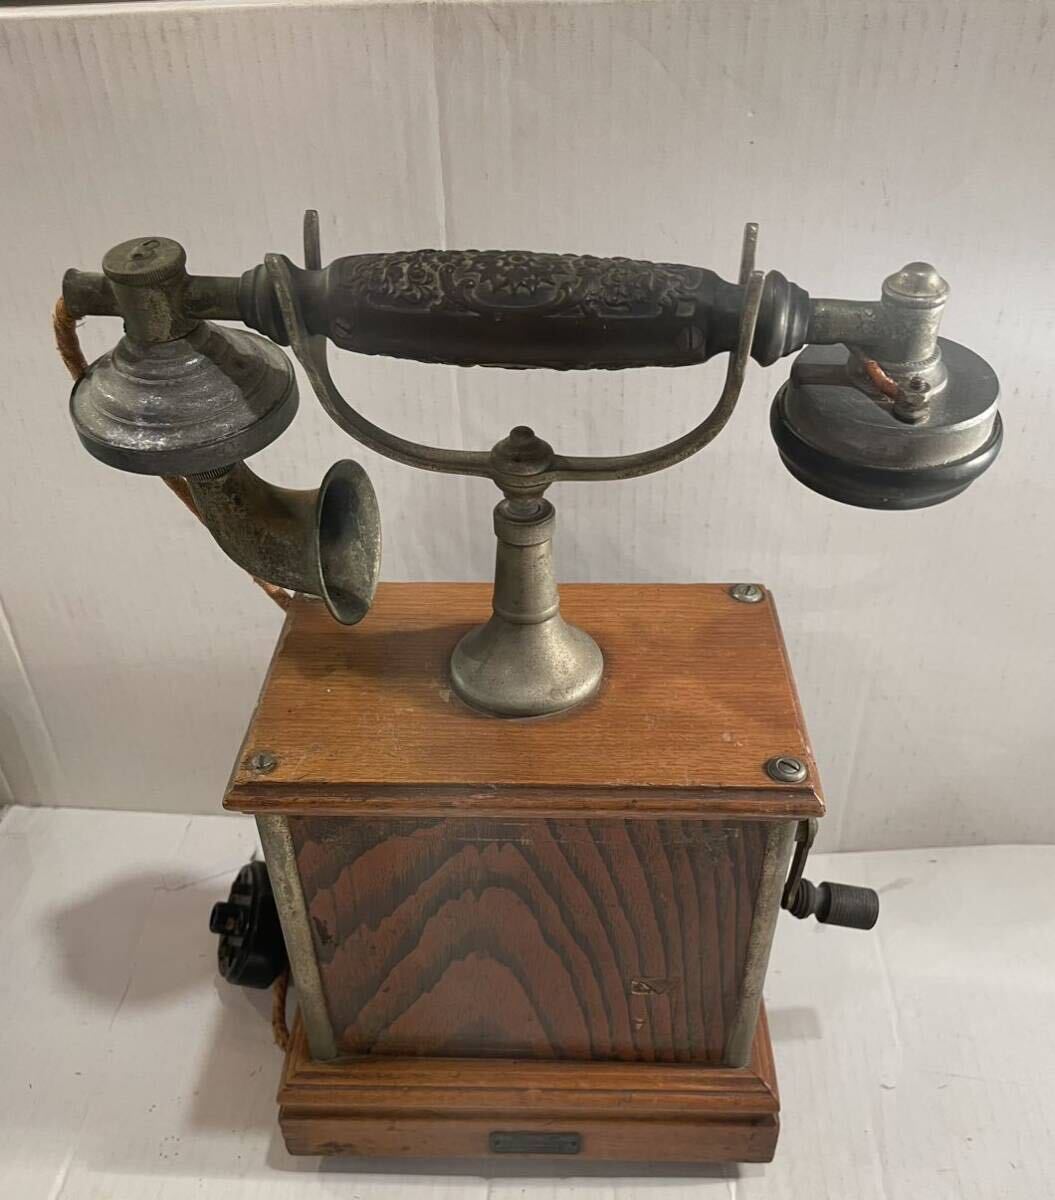 [ Taisho that time thing ] Japan electric corporation made Derbi ru magnet type desk telephone machine hand turning 1920 period Taisho romance antique Vintage telephone desk telephone machine 